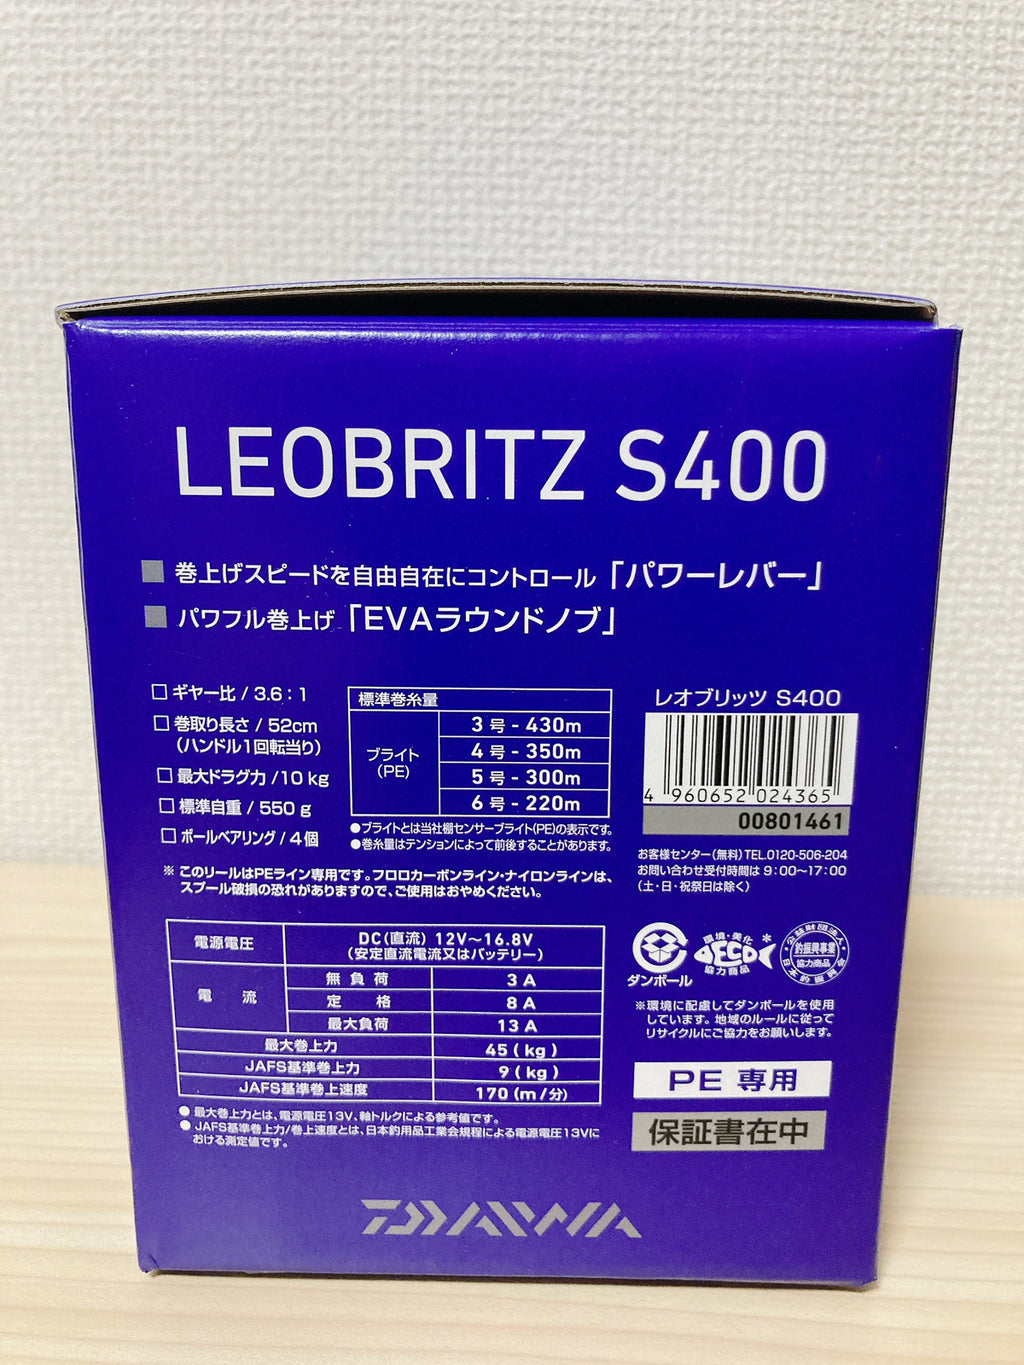 Daiwa Electric Power Assist Reel 16 LEOBRITZ S400 3.6:1 Fishing Reel I